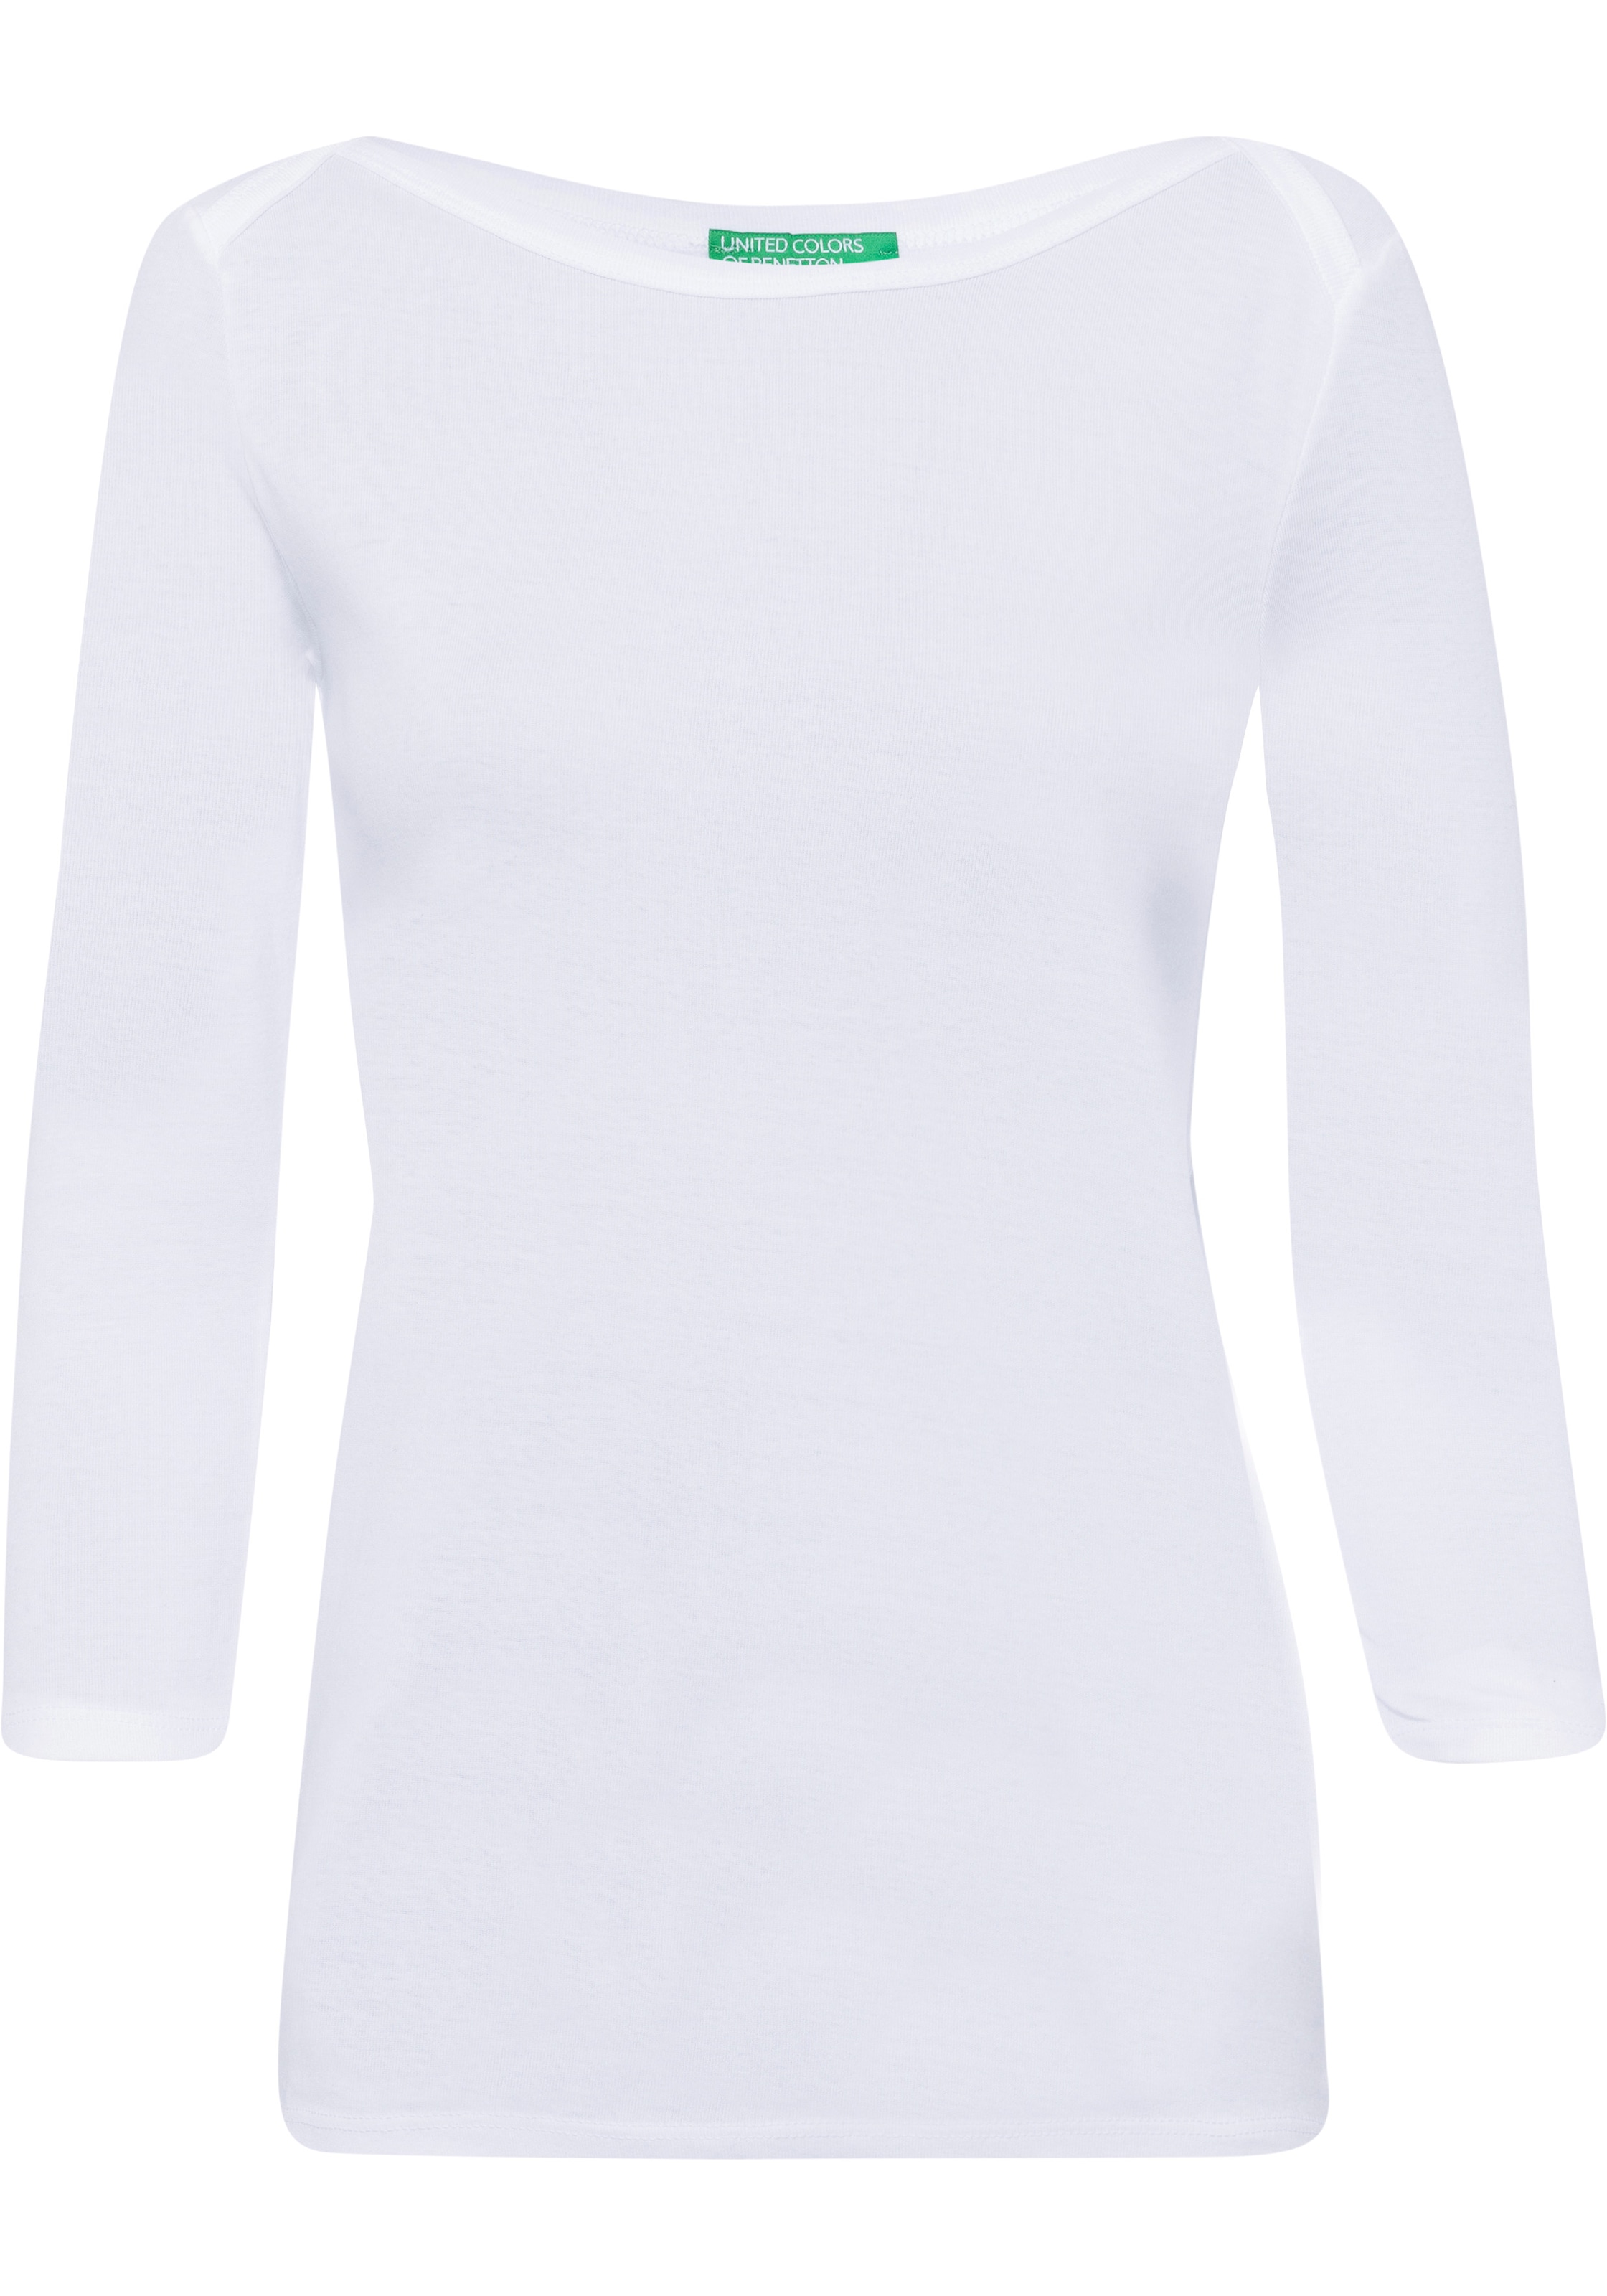 OTTO mit 3/4-Arm-Shirt, toniger Benetton Logo-Stickerei im of Online Shop United Colors